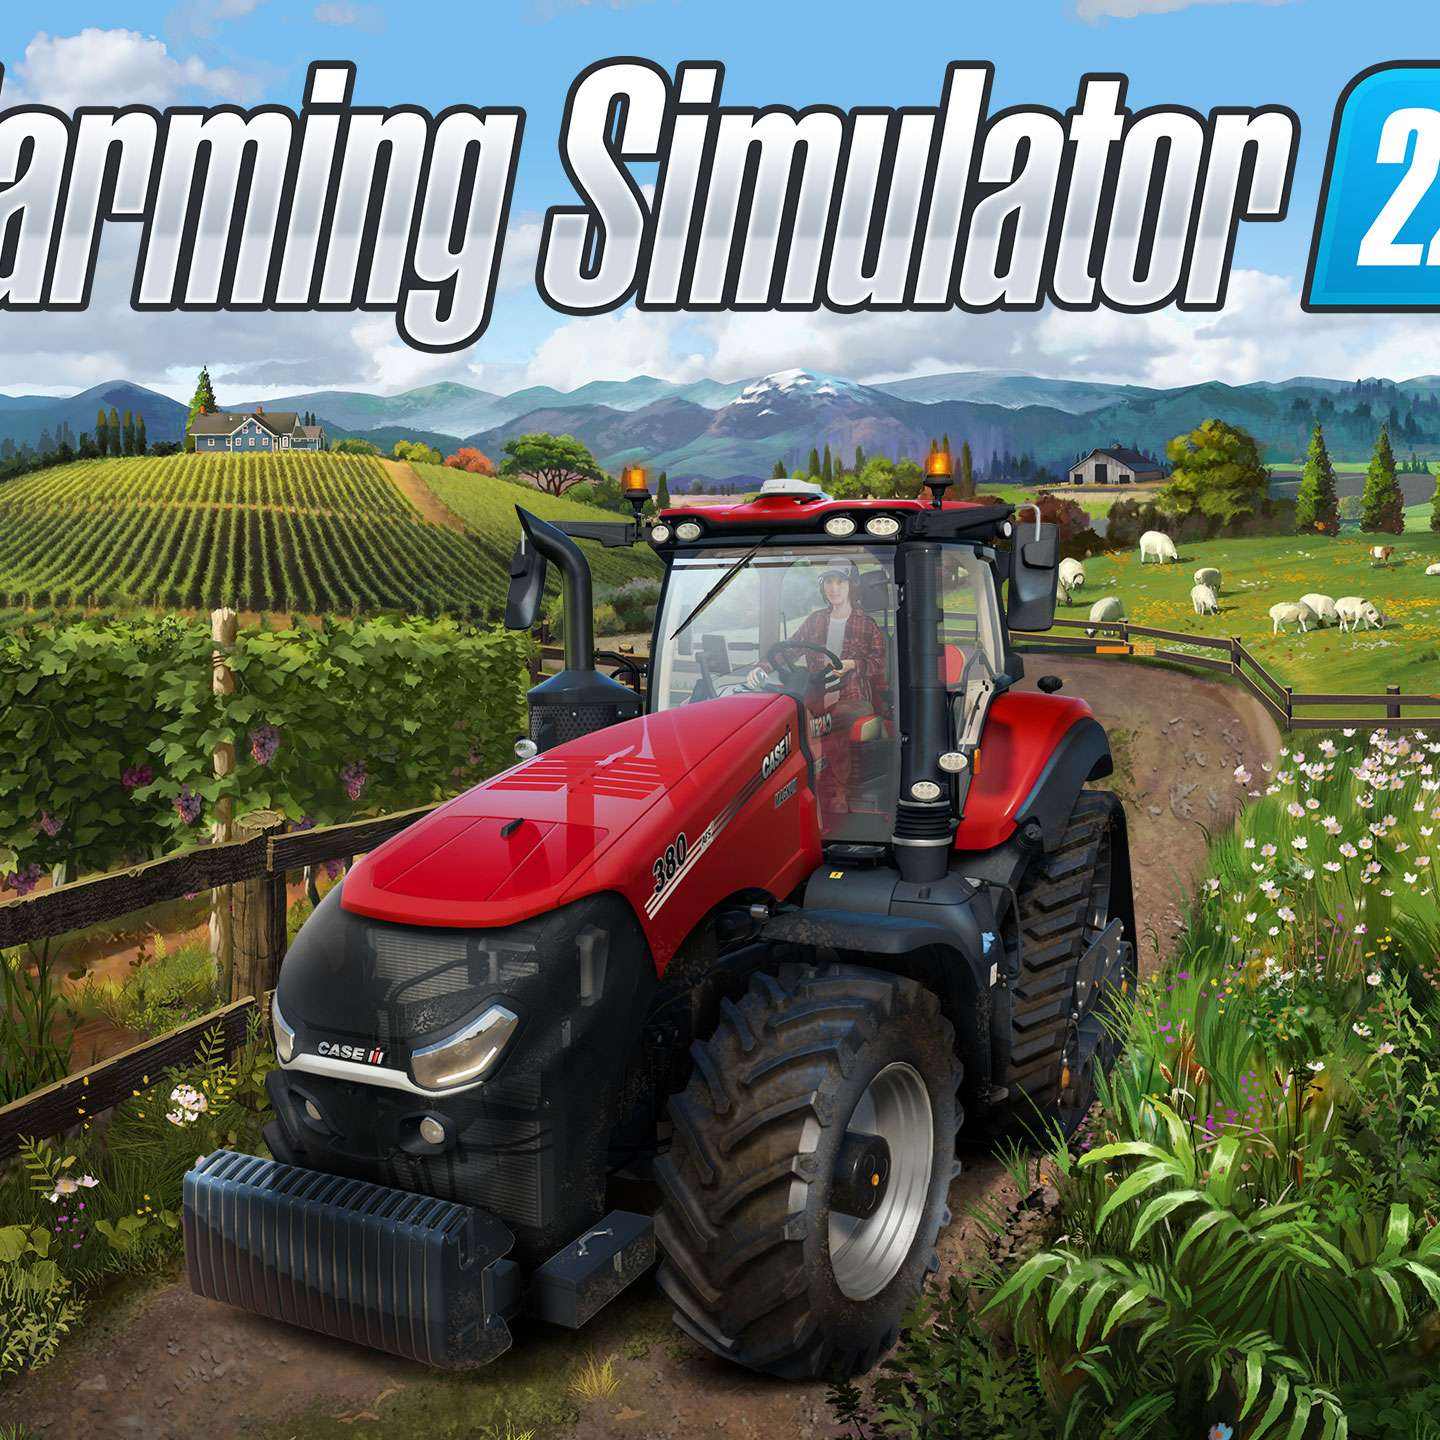 Epic喜加一免费领取《模拟农场22》 实测领到《模拟农场22》